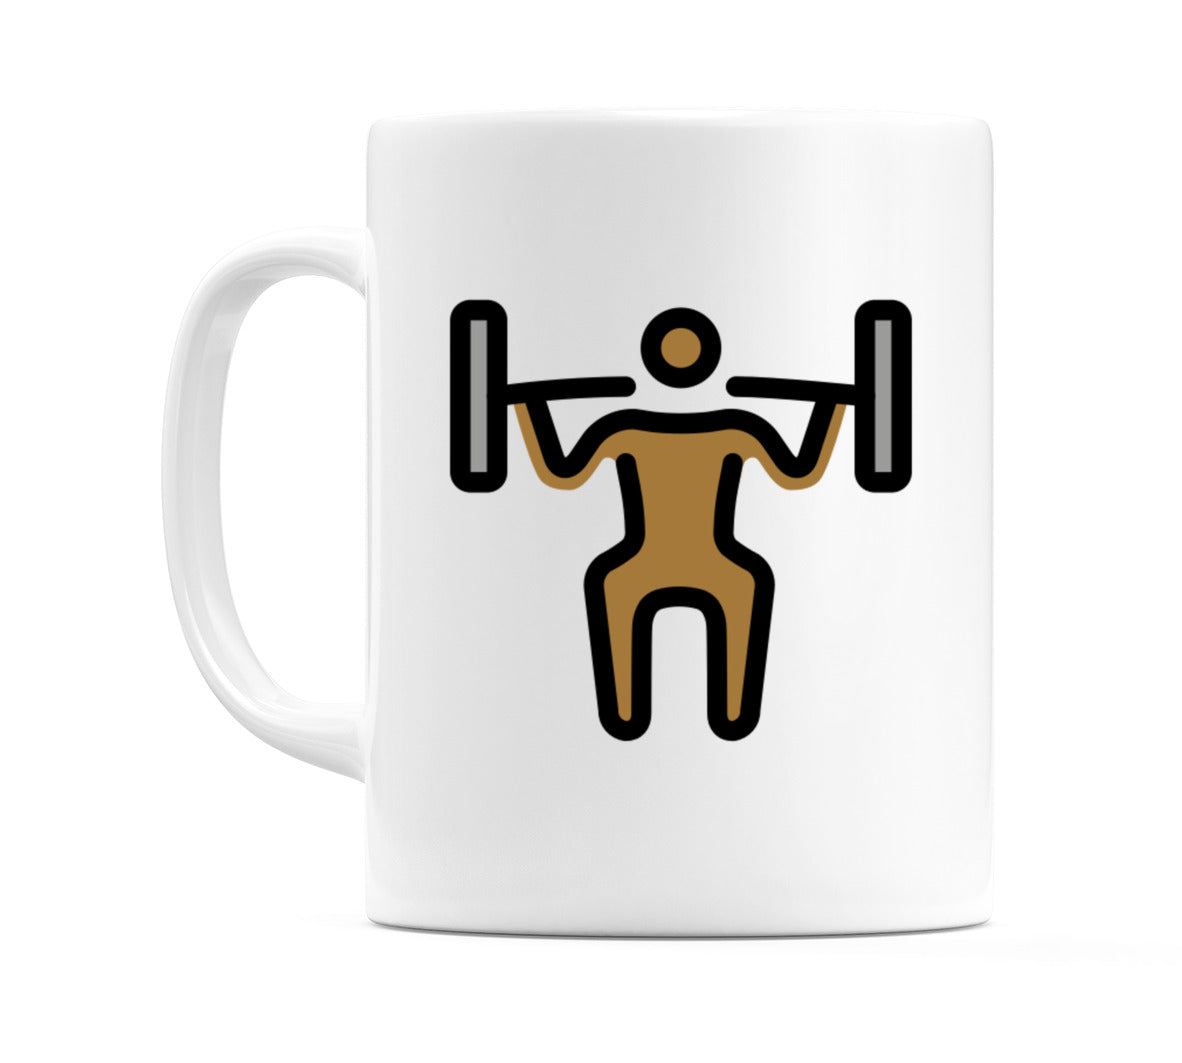 Male Lifting Weights: Medium-Dark Skin Tone Emoji Mug